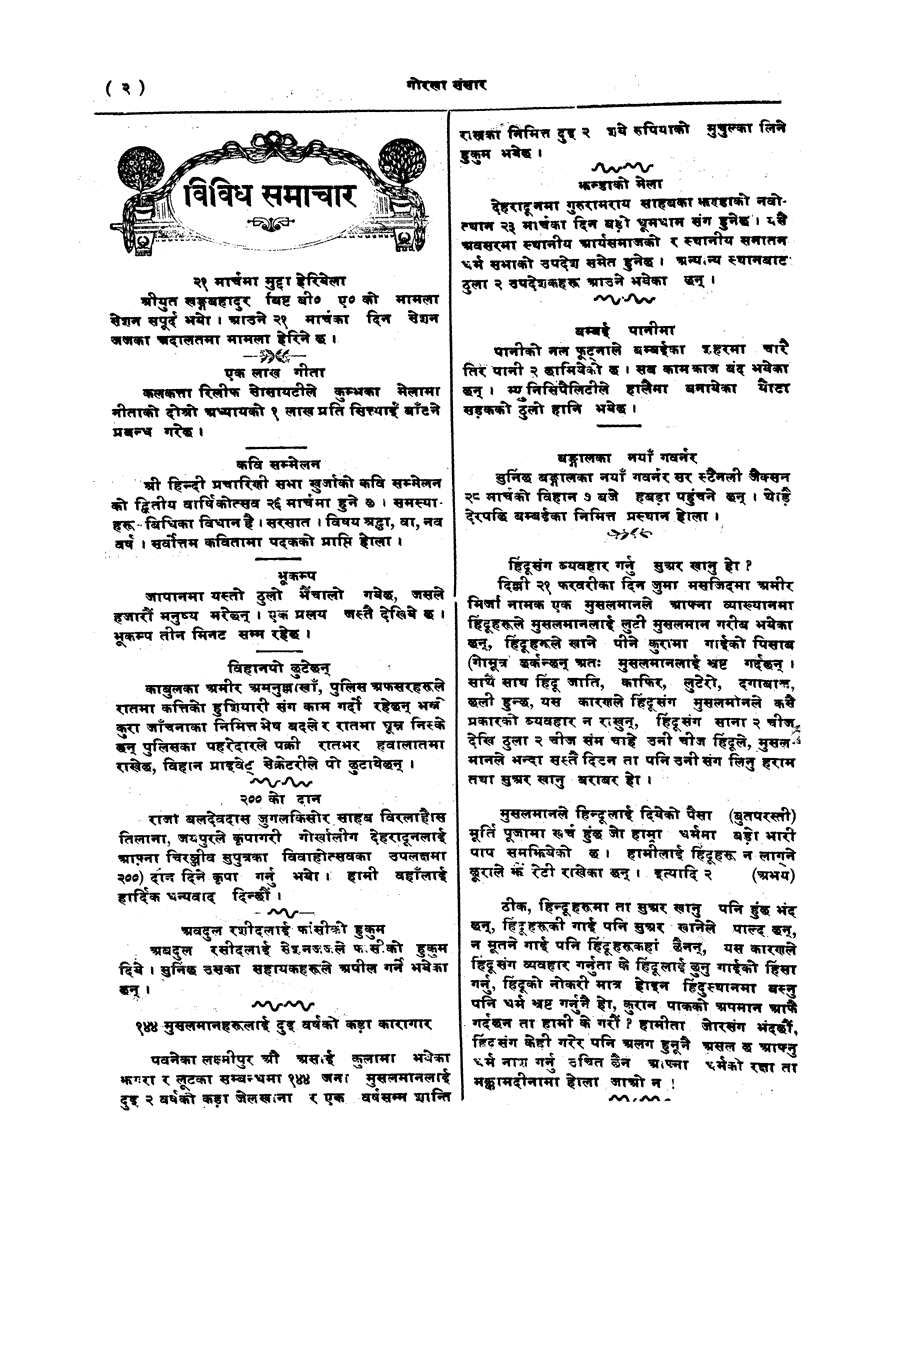 Gorkha Sansar, 15 Mar 1927, page 2